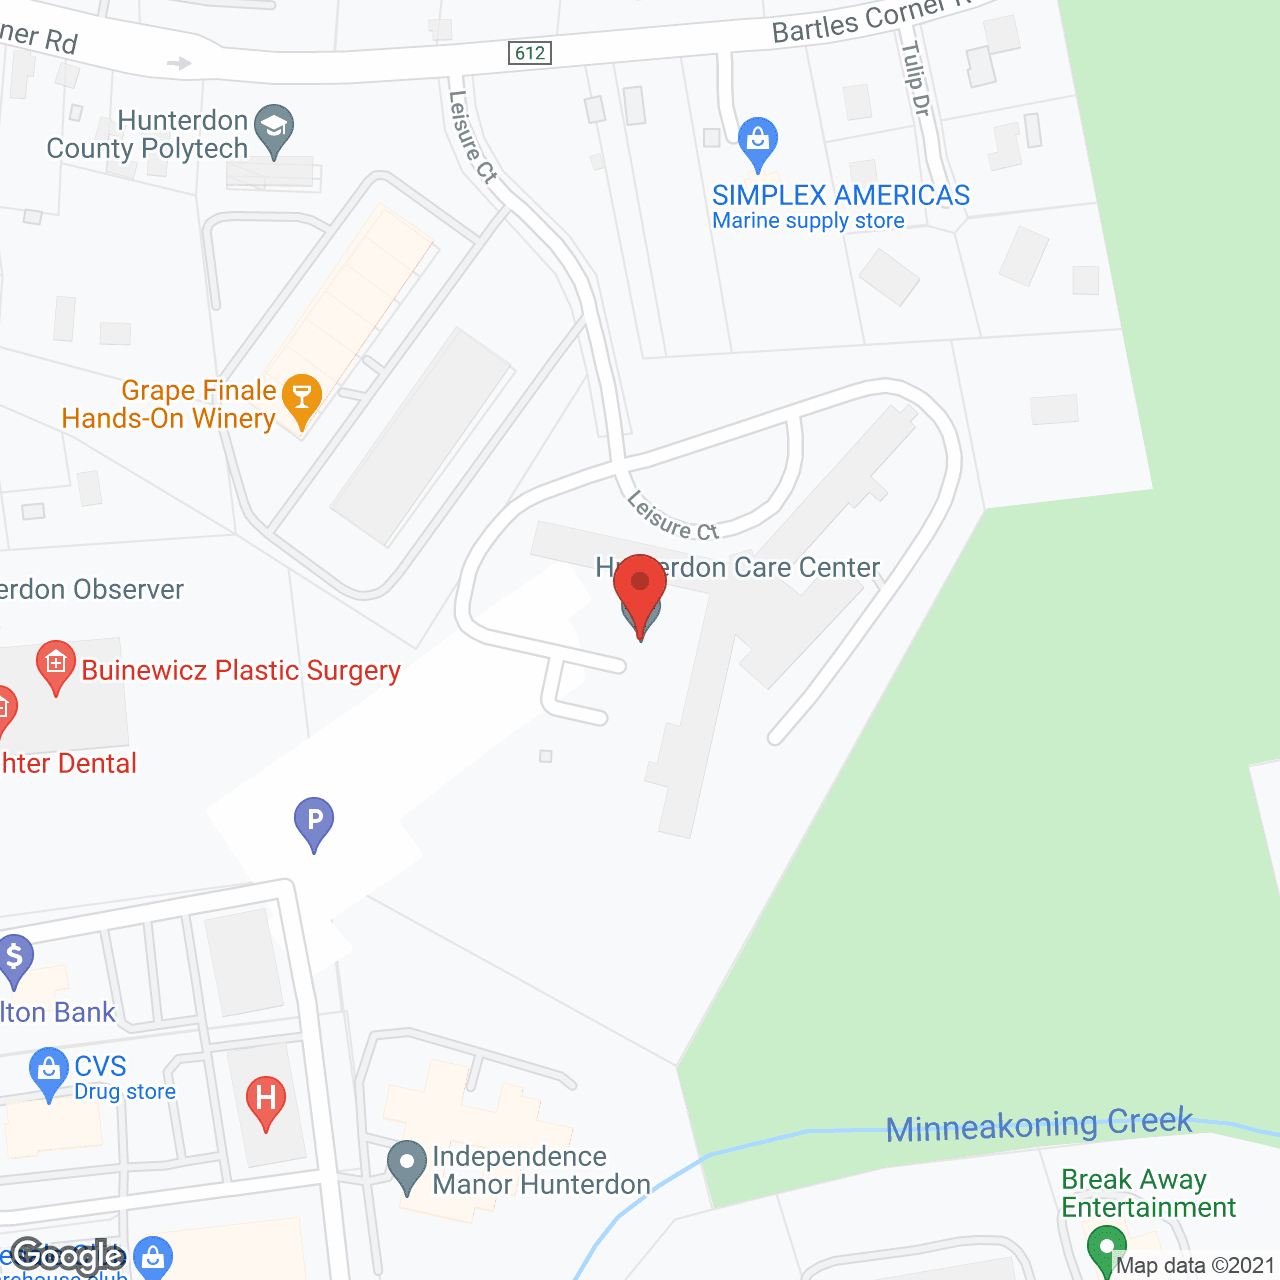 Hunterdon Care Ctr in google map